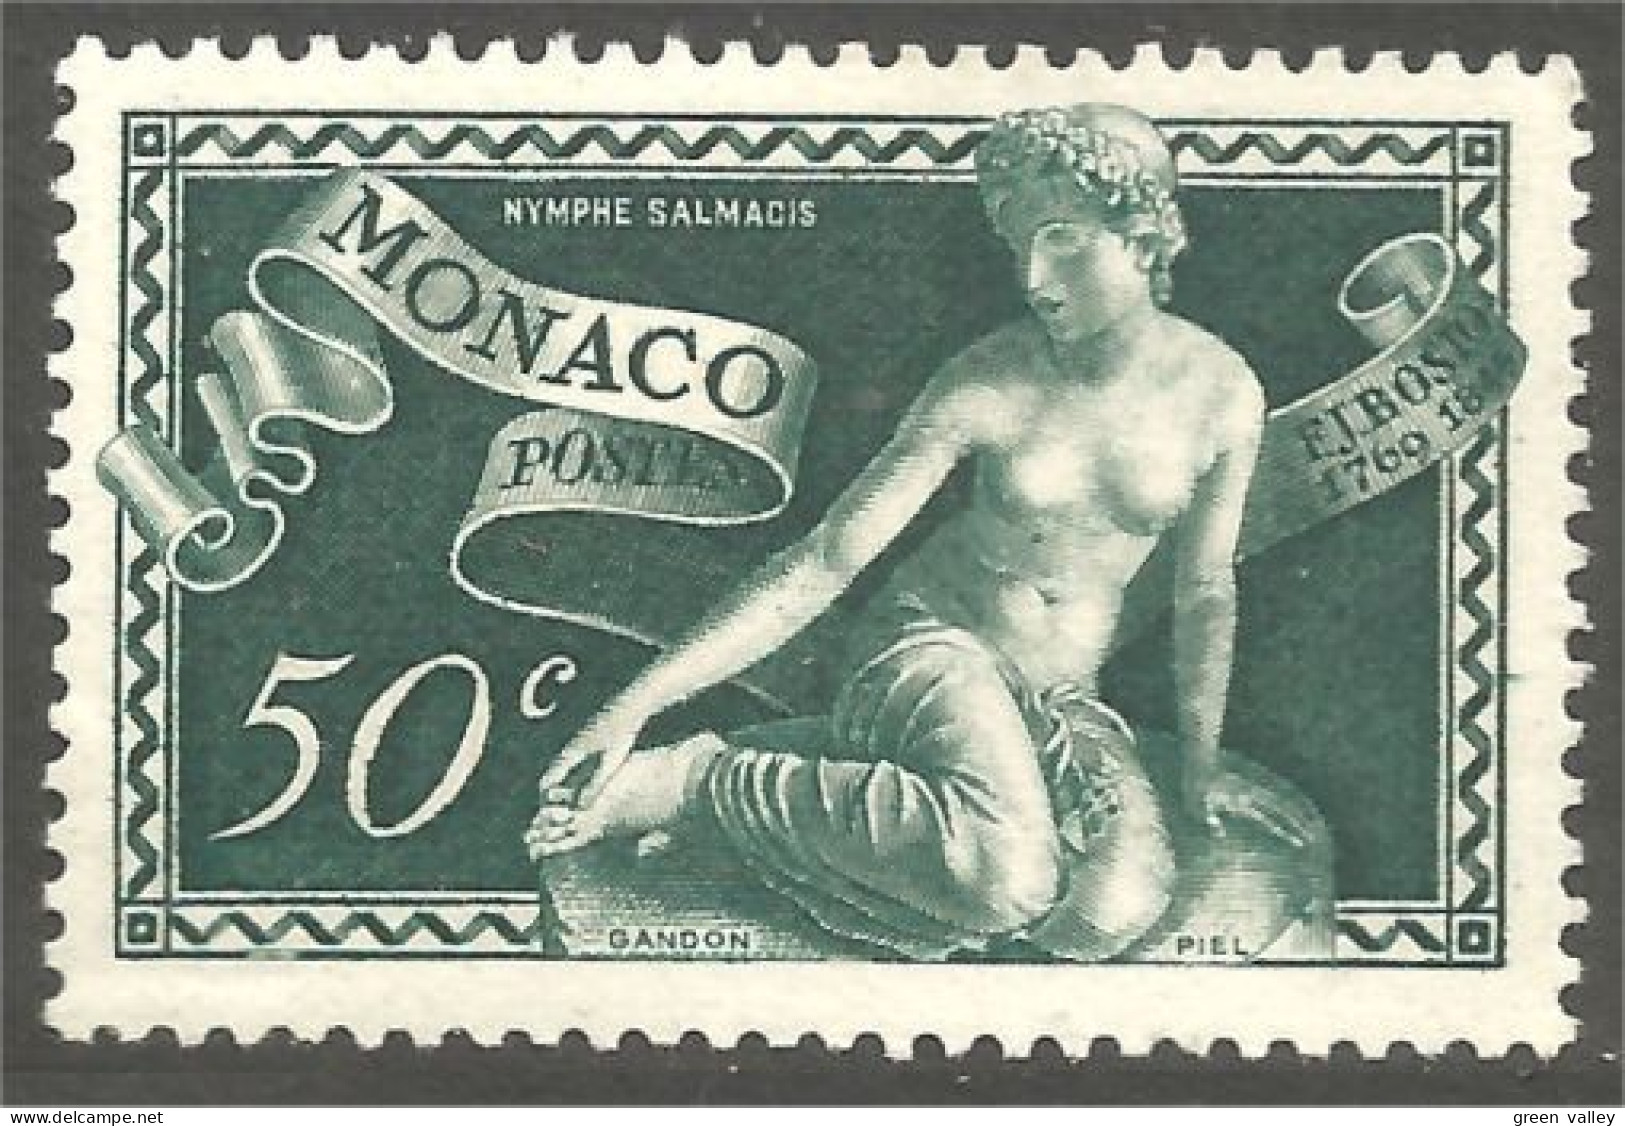 630x Monaco Nymphe Salmacis Bosio Sulpture Statue Nude MH * Neuf (MON-949) - Mythology